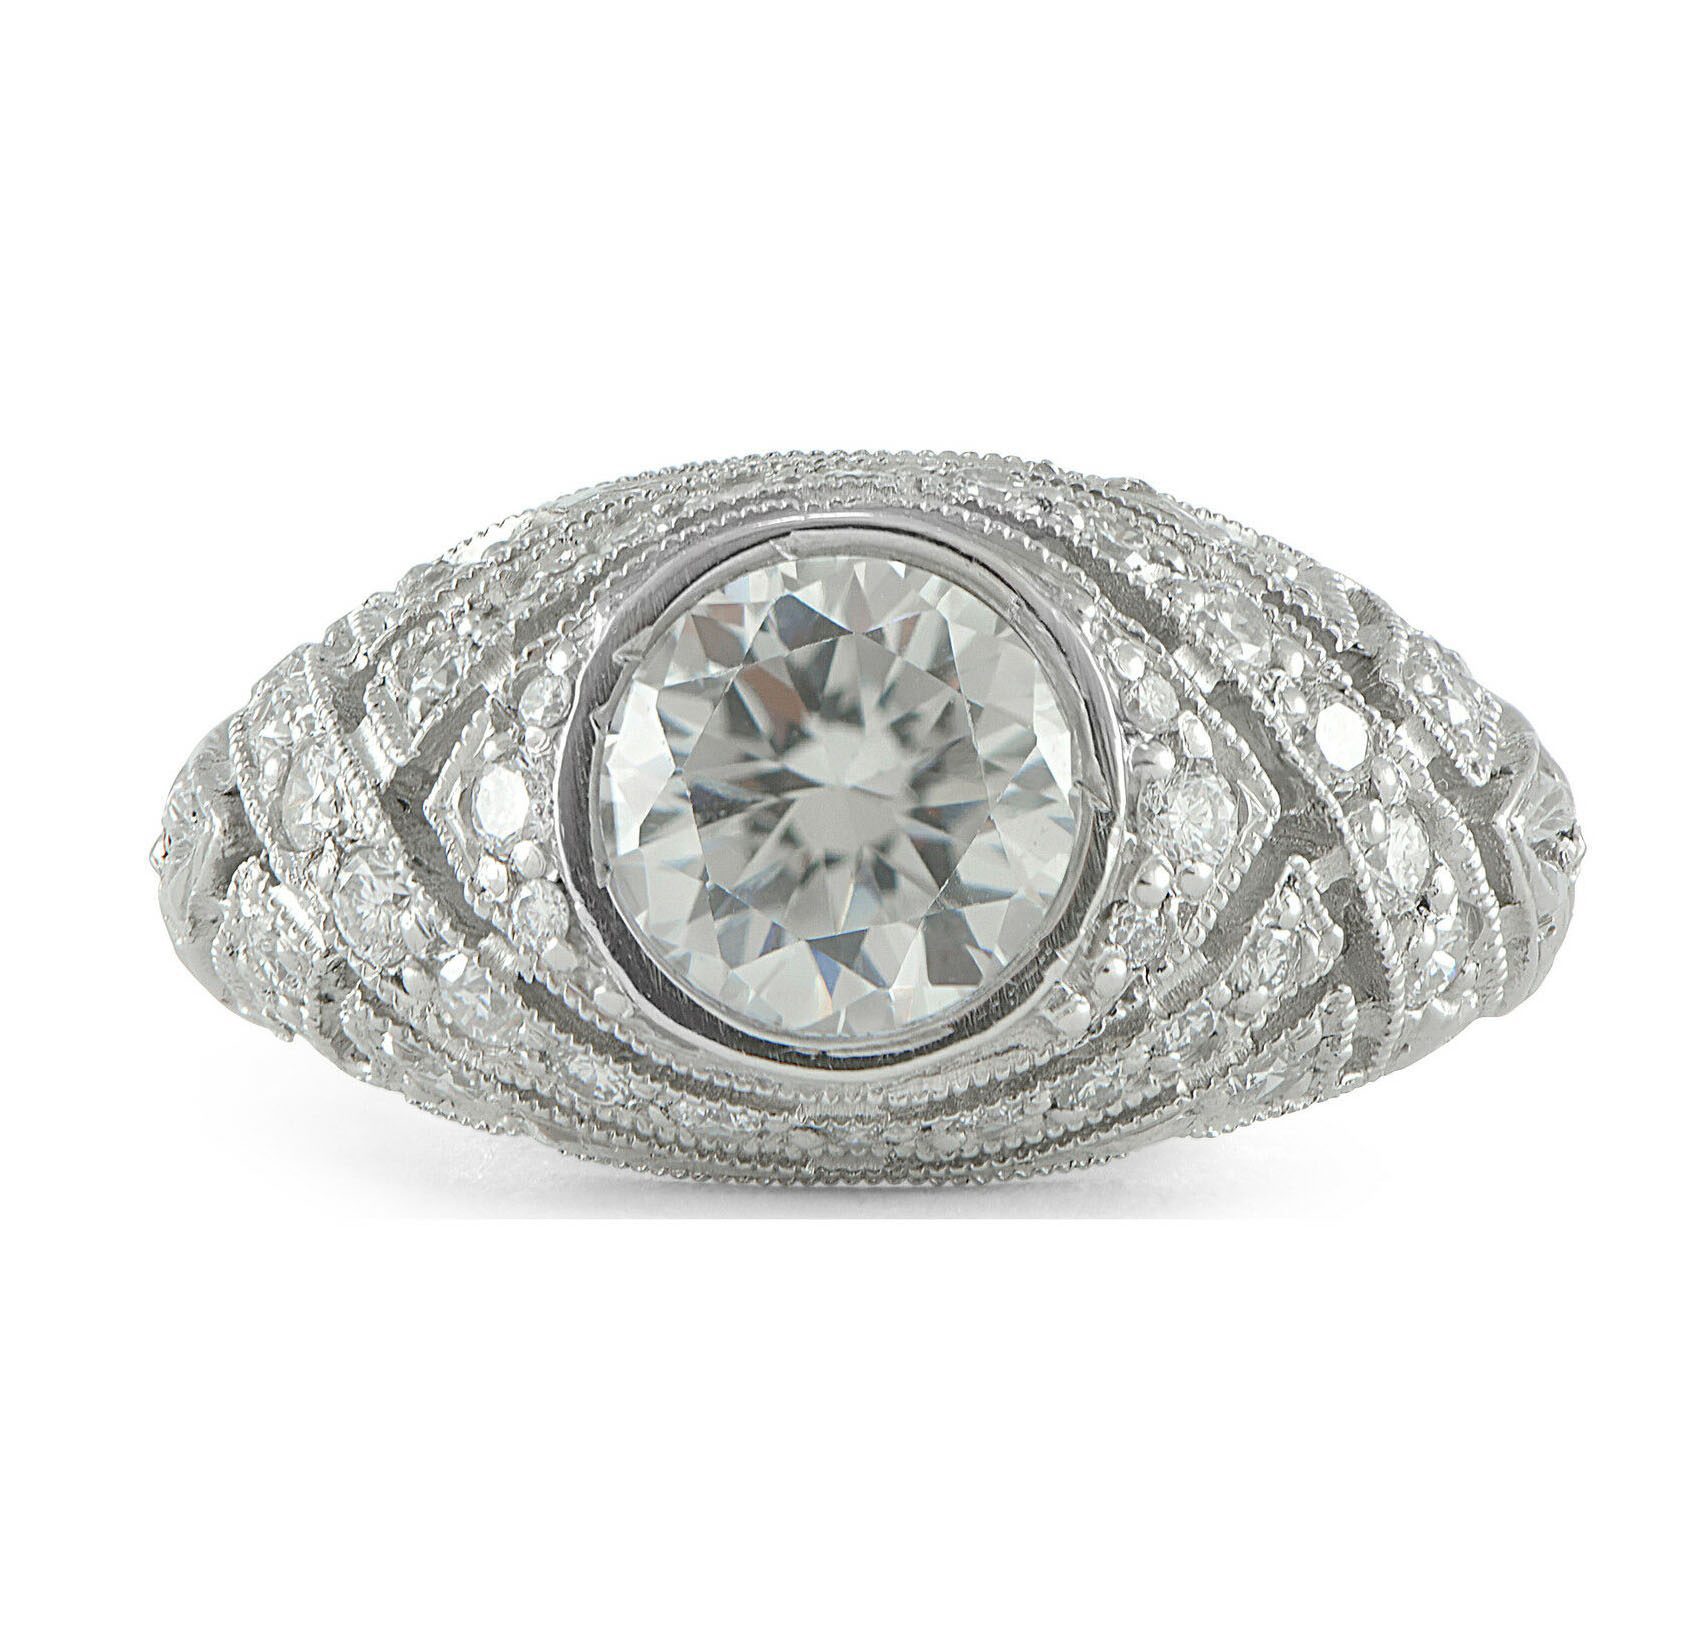 Antique-Round-Bezel-Semi-Mount-Engagement-Ring-Platinum-Engraved-Bead-Setting-SZ-172745558200